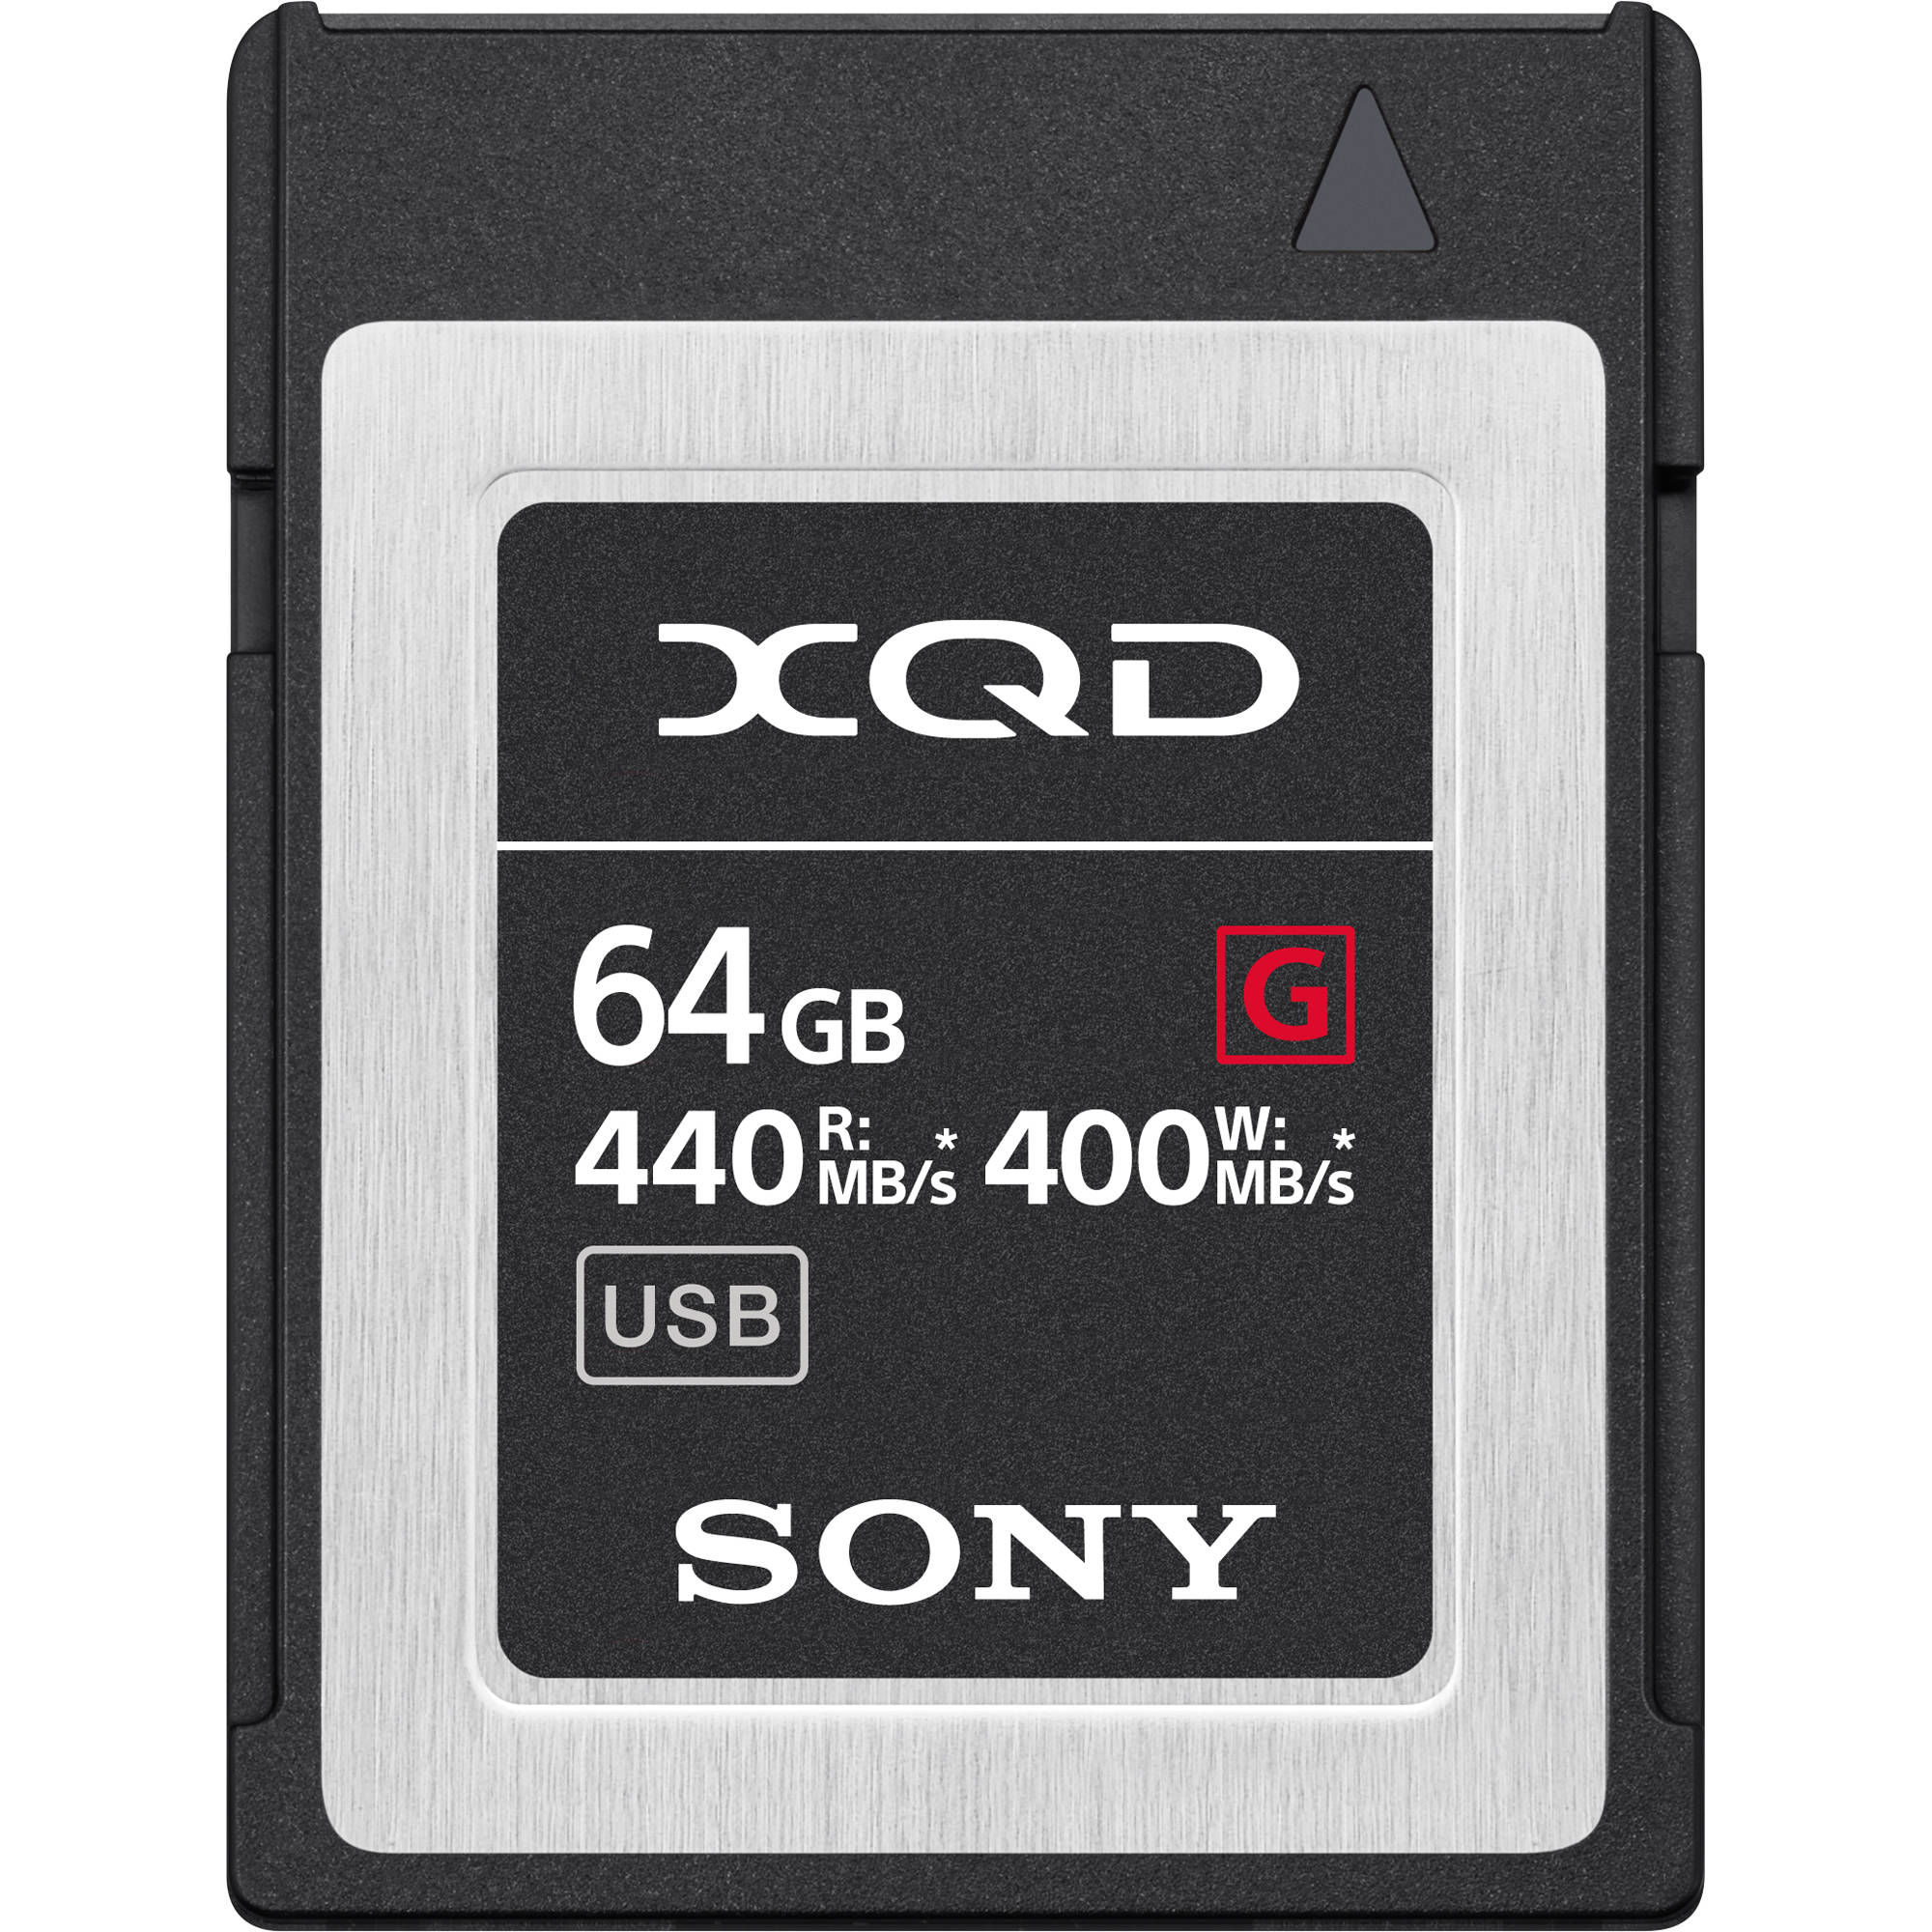 TThumbnail image for Sony 64GB G Series XQD